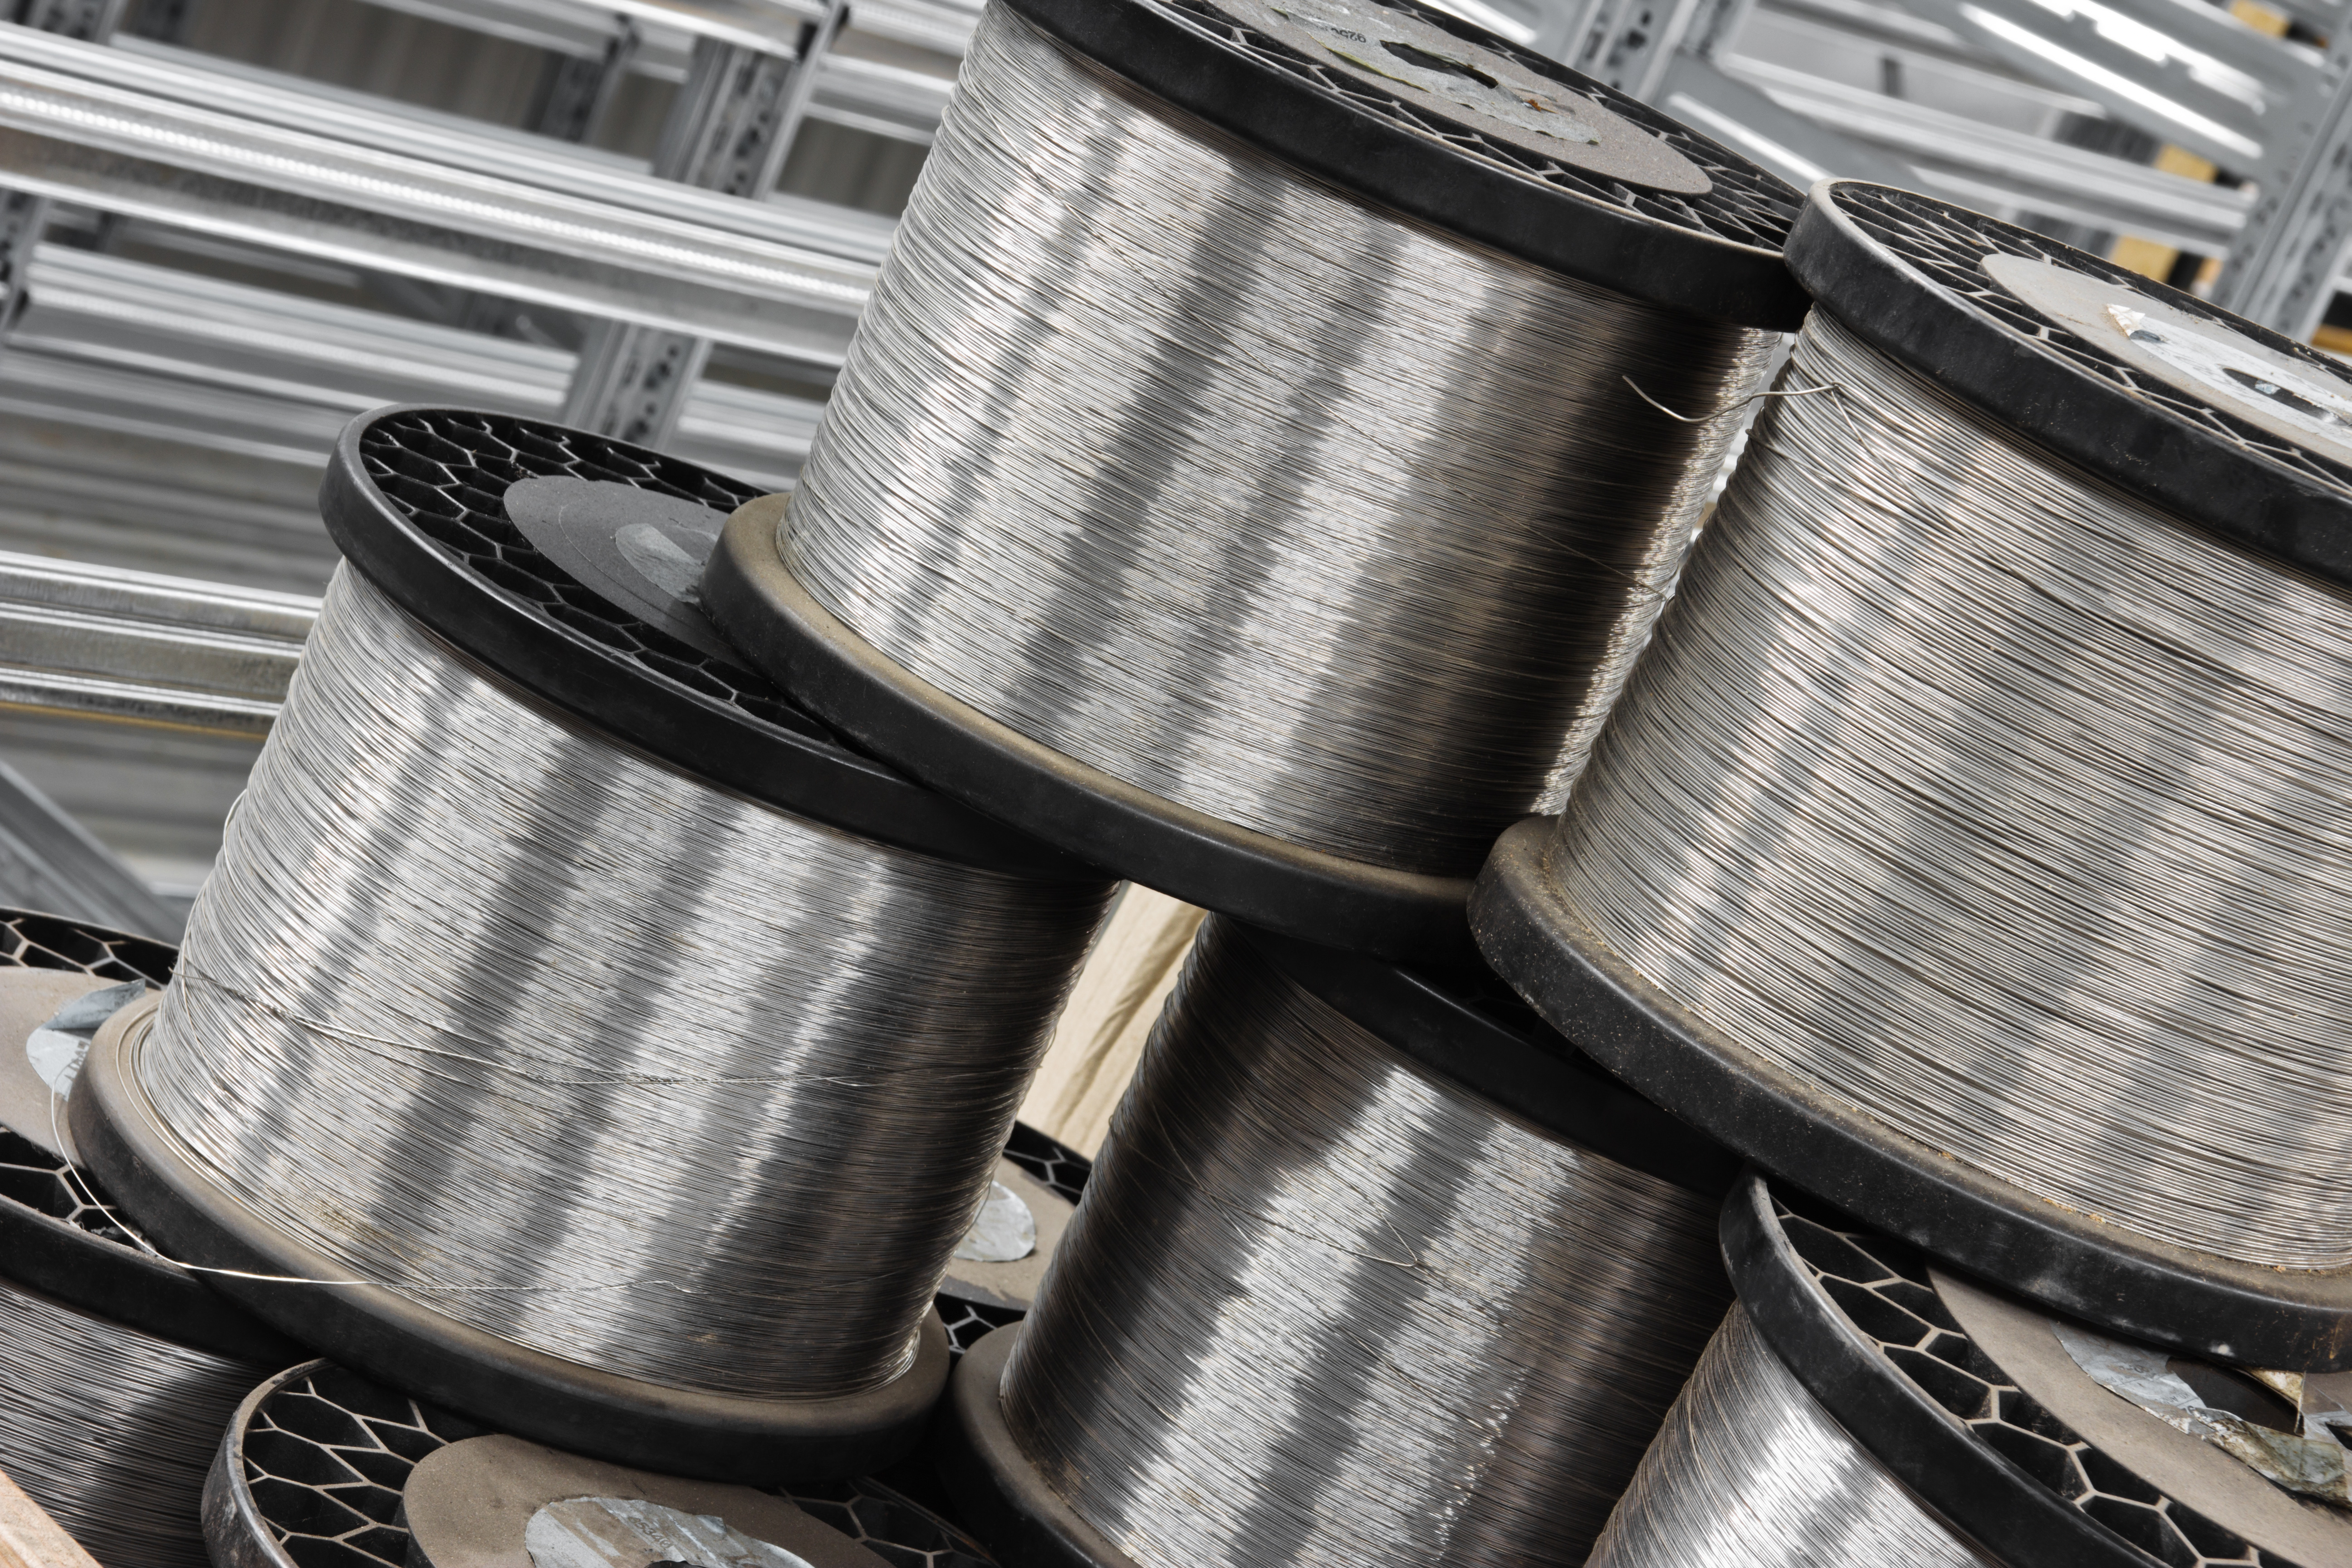 Stainless Steel: An Increasing Market